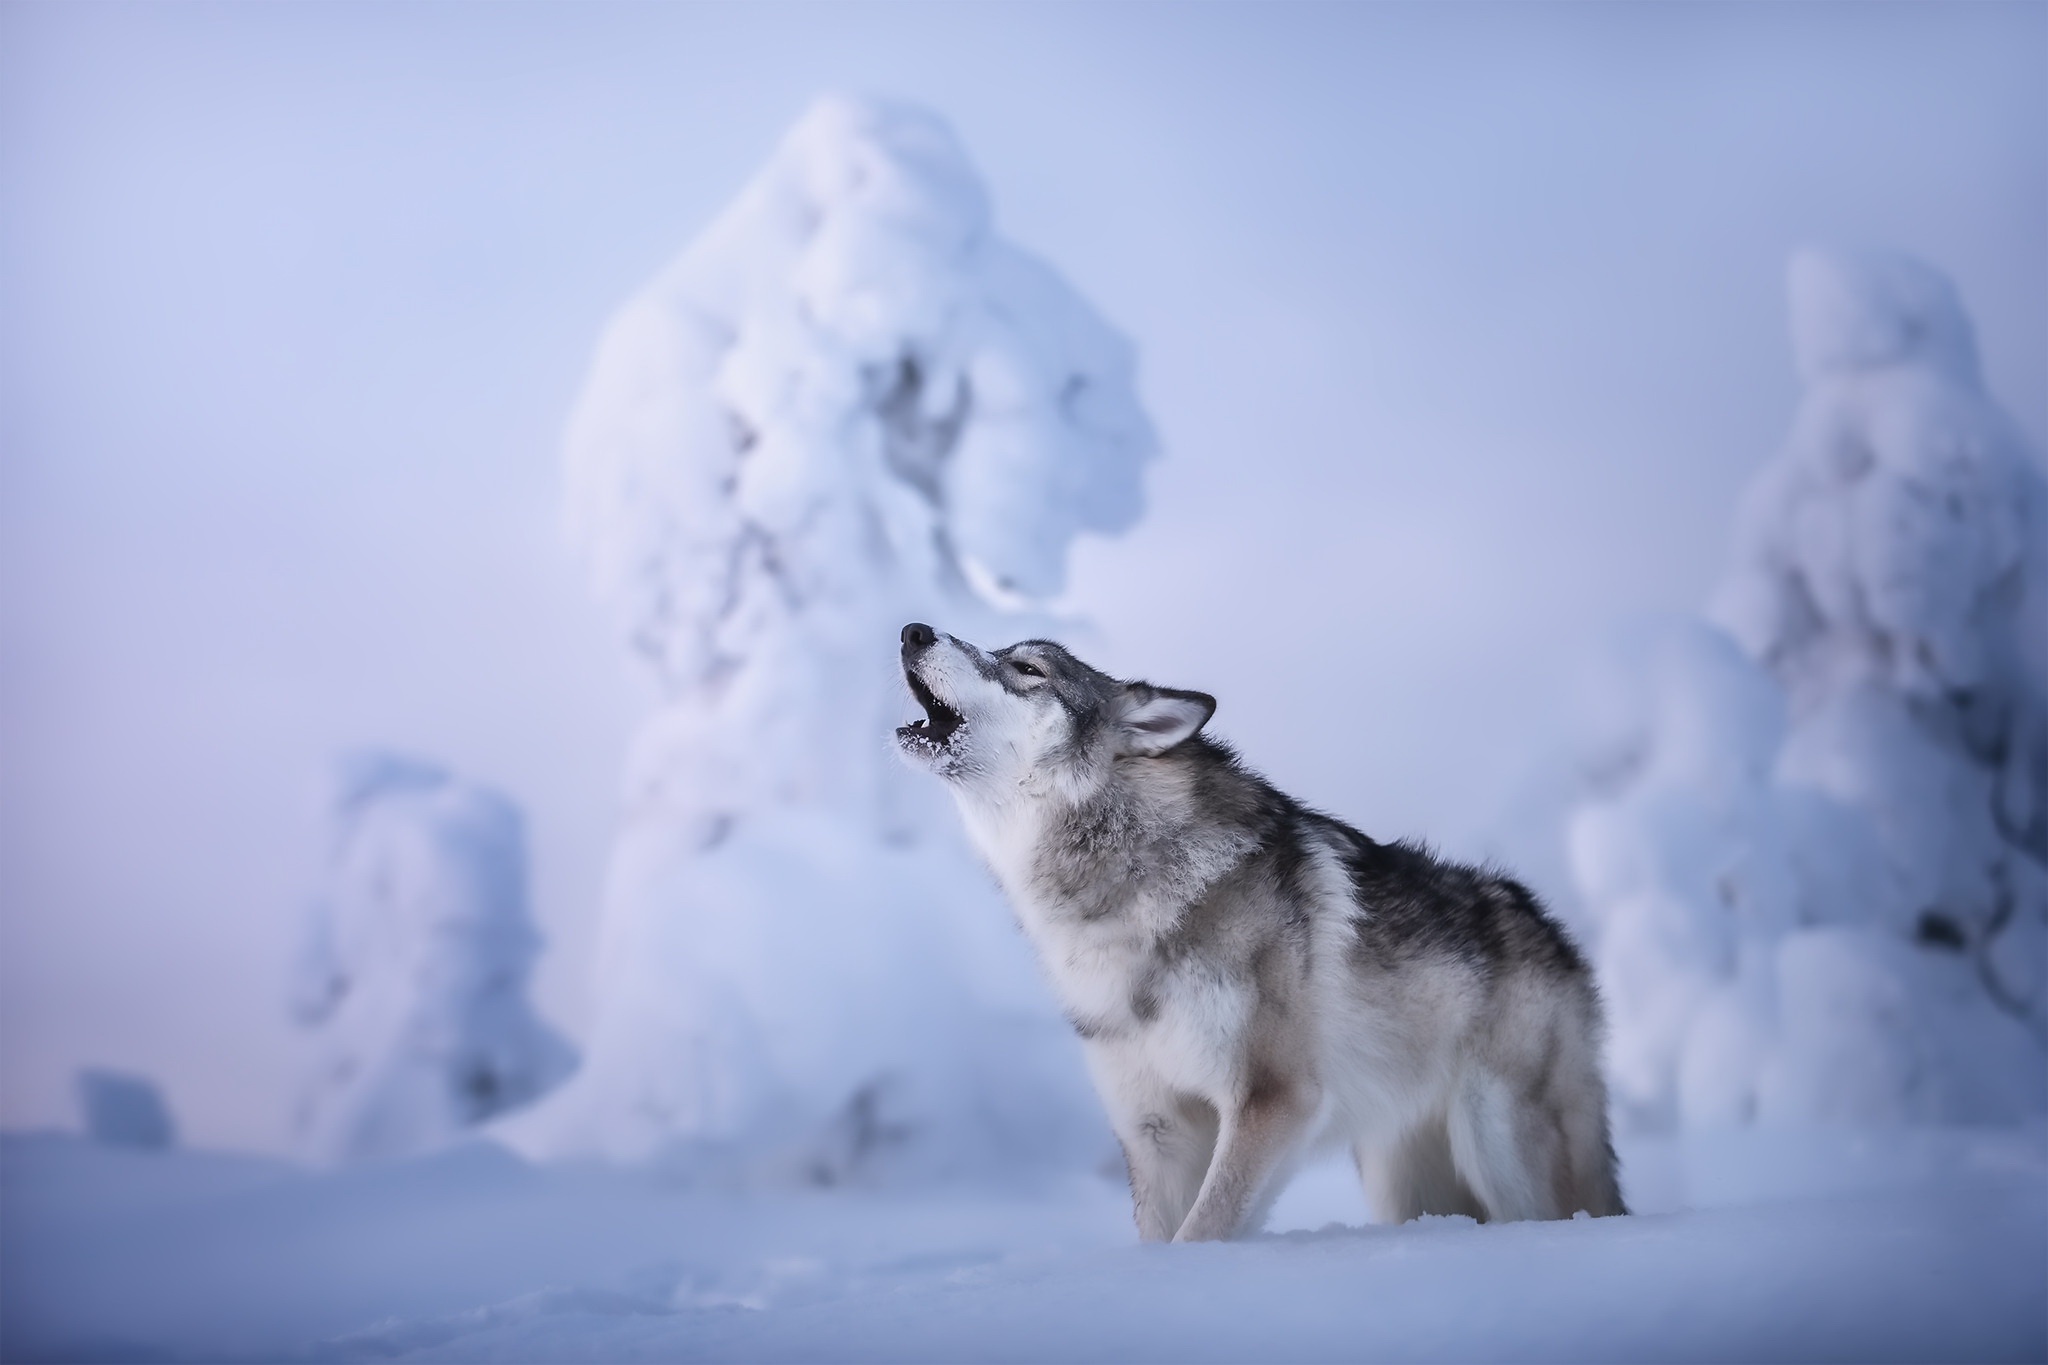 General 2048x1365 animals mammals wolf snow winter cold outdoors